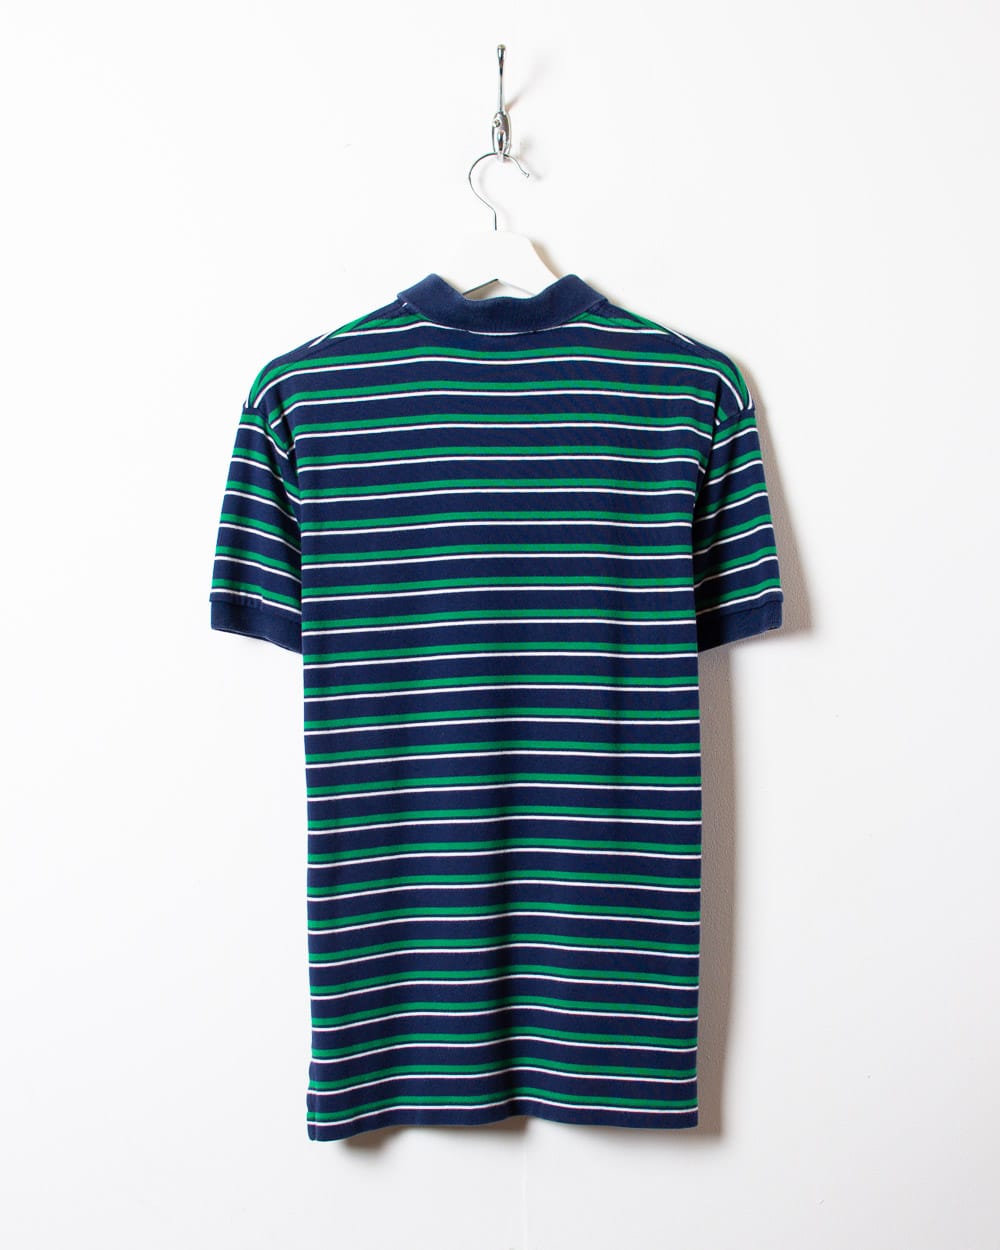 Green Polo Ralph Lauren Striped Polo Shirt - Small